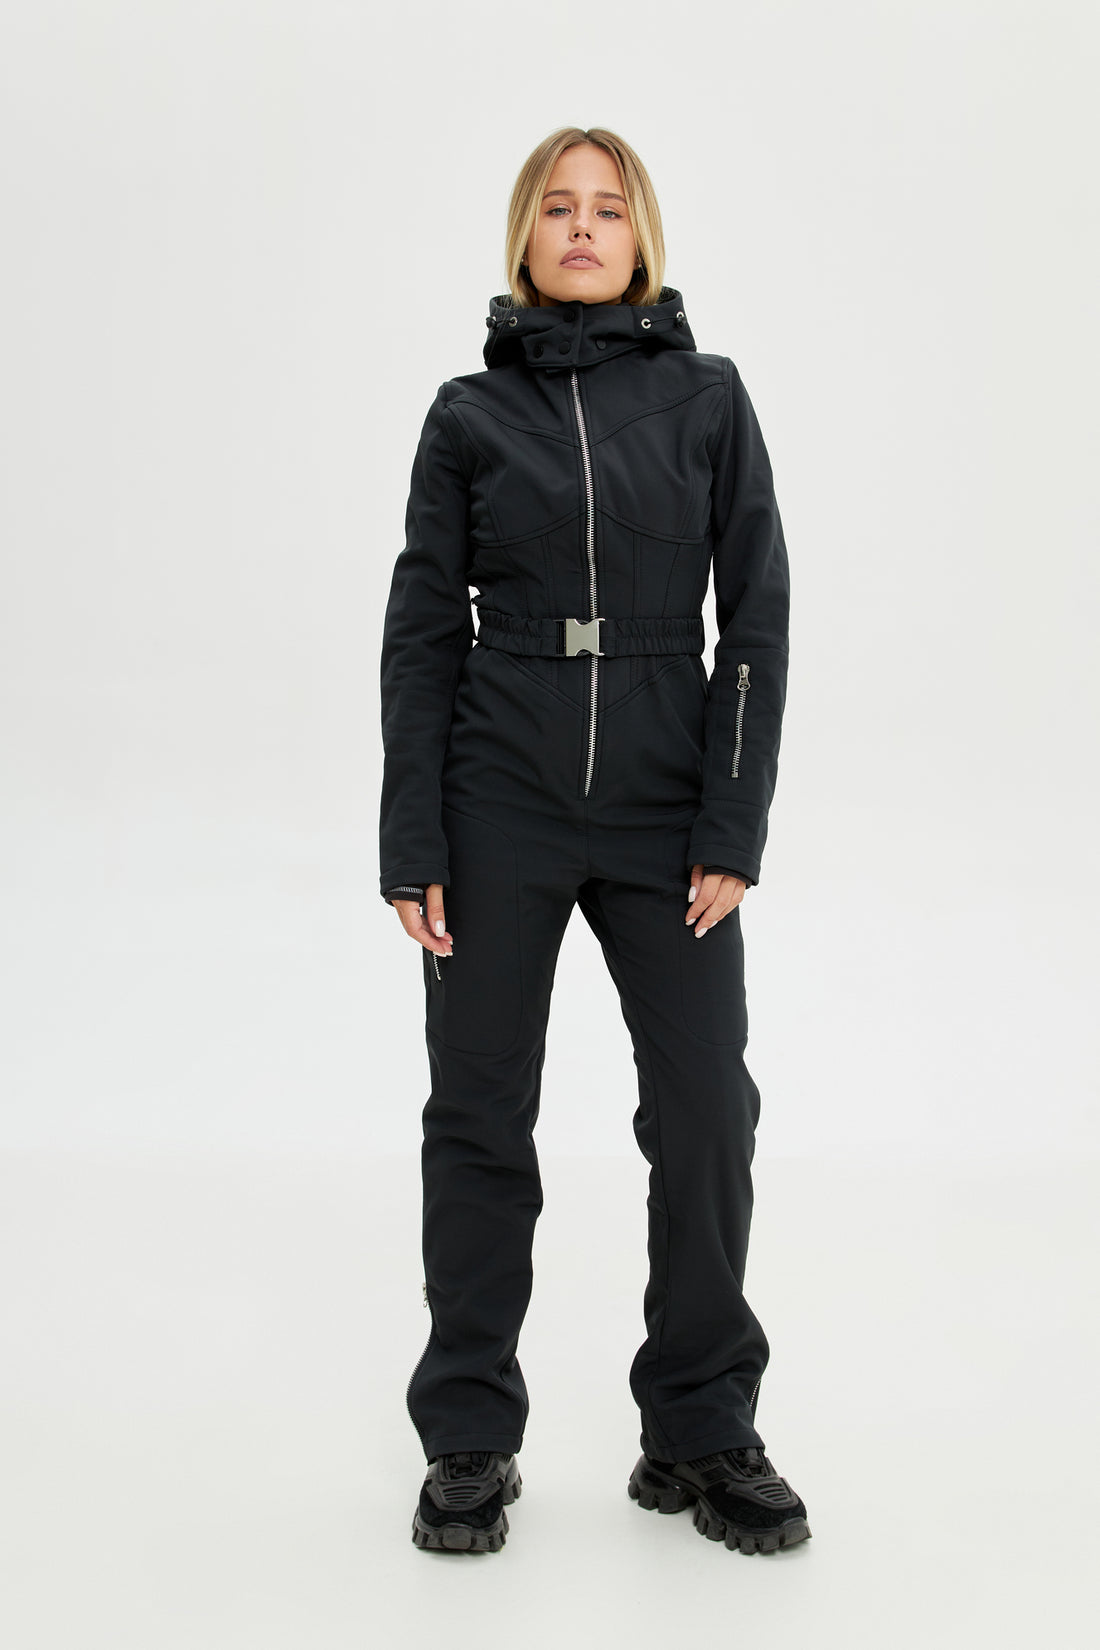 Ski suits for women – UpWearAndSuits